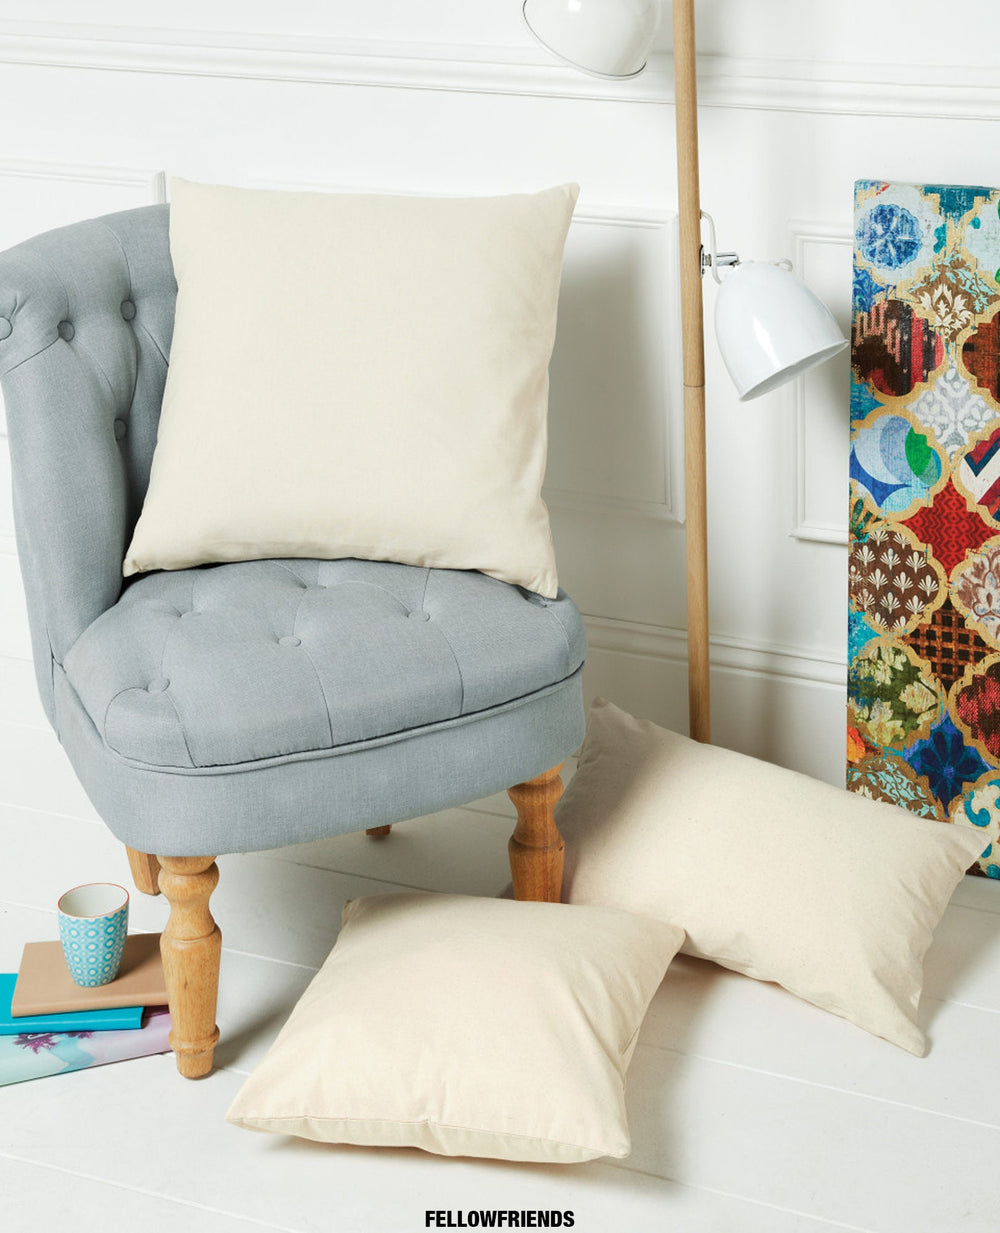 Dalmatian cushion, dog pillow, dalmatian pillow, cover cotton canvas print, dog lover gift for her 40 x 40 50 x 50 203